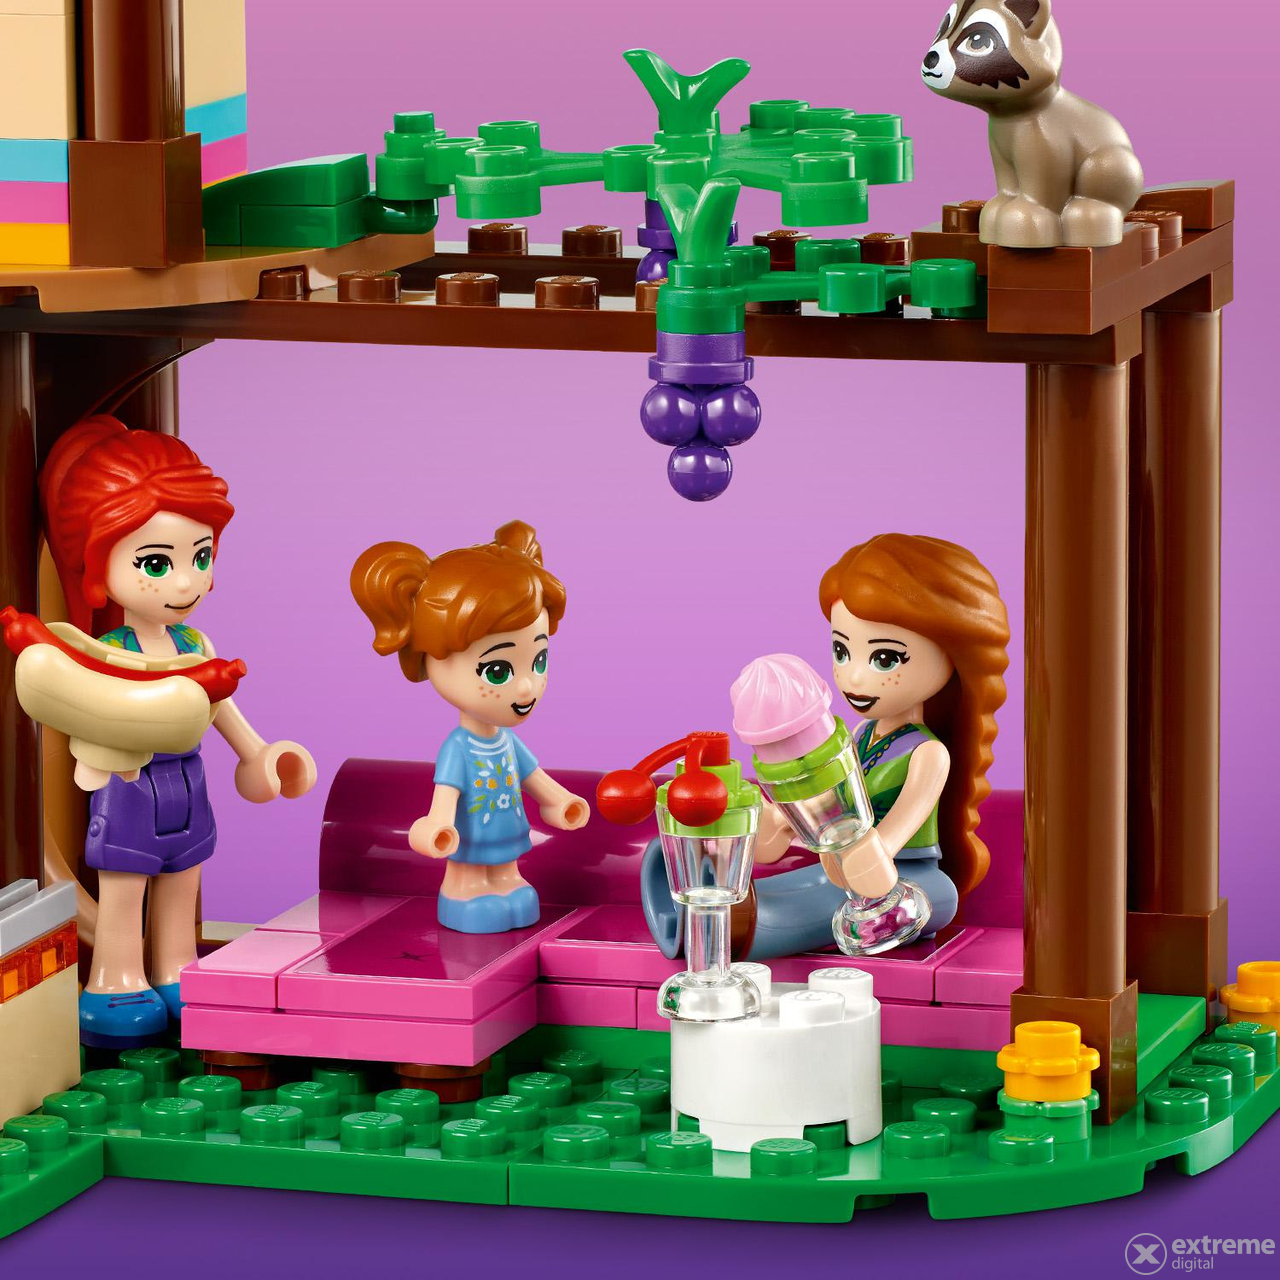 LEGO® Friends 41679 Baumhaus im Wald